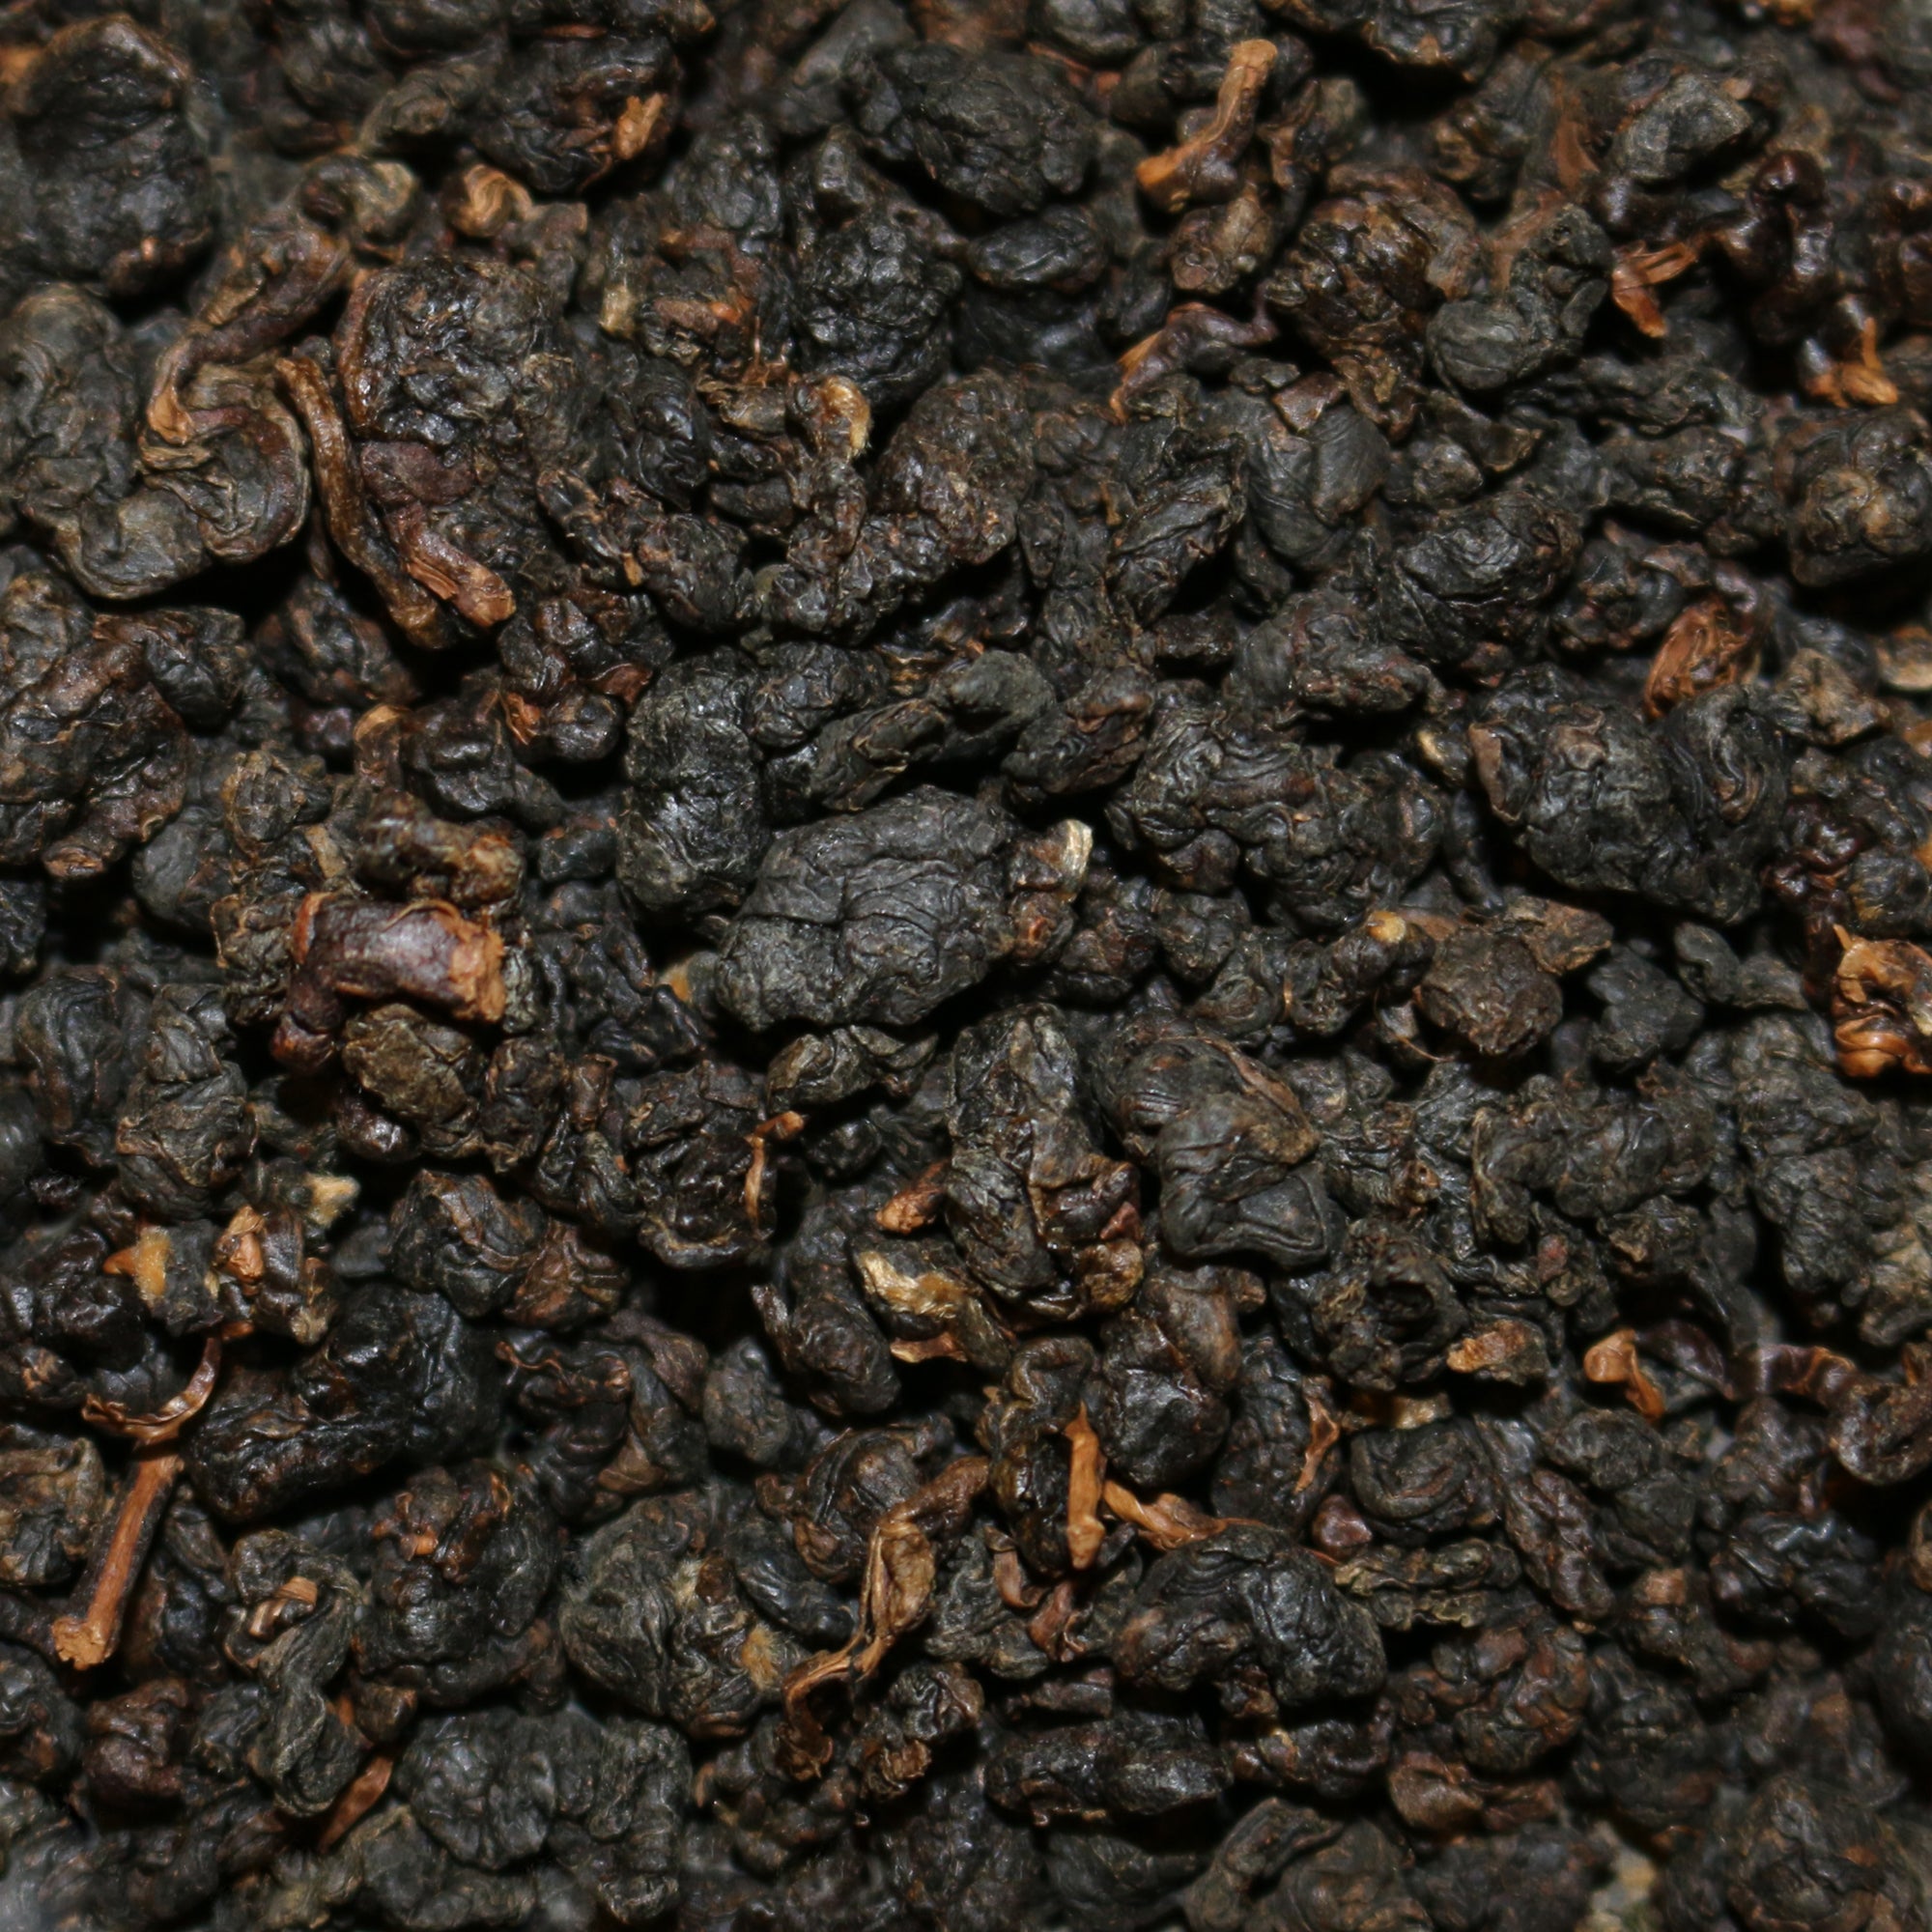 Sumatra Hand-Rolled Black Tea